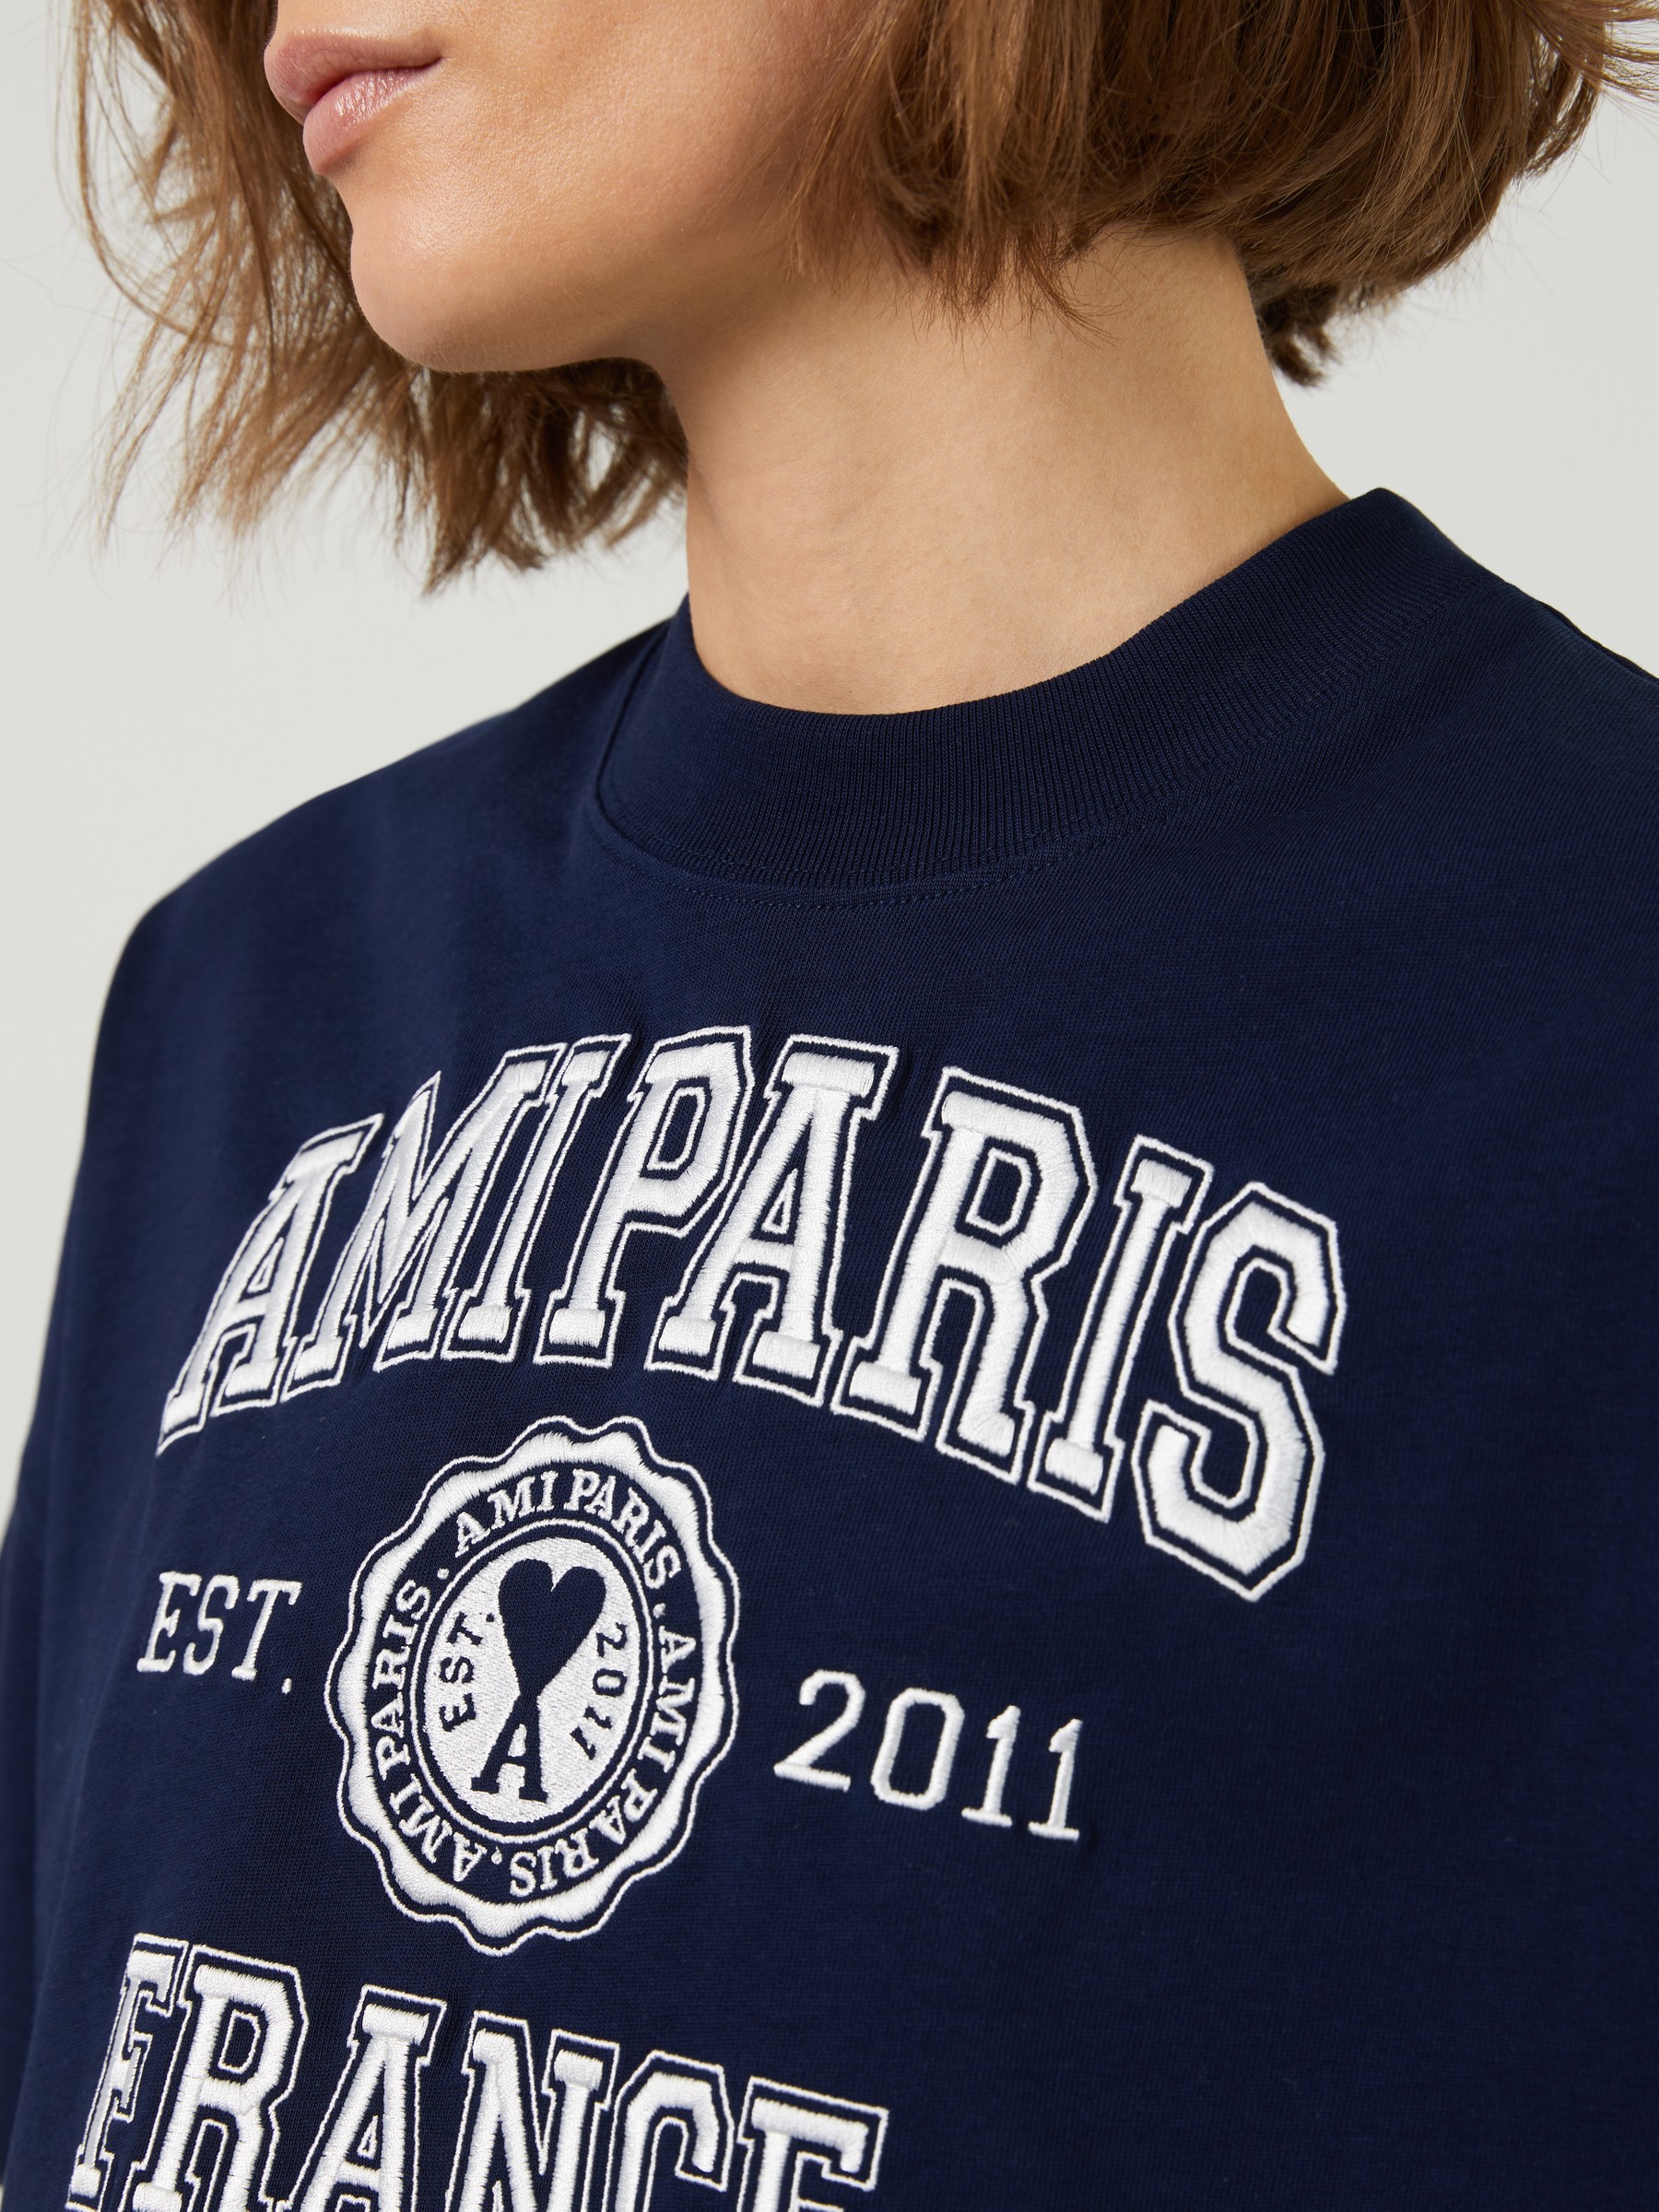 AMI PARIS T-shirt 'Ami Paris France' Navy blue | Korte ærmer